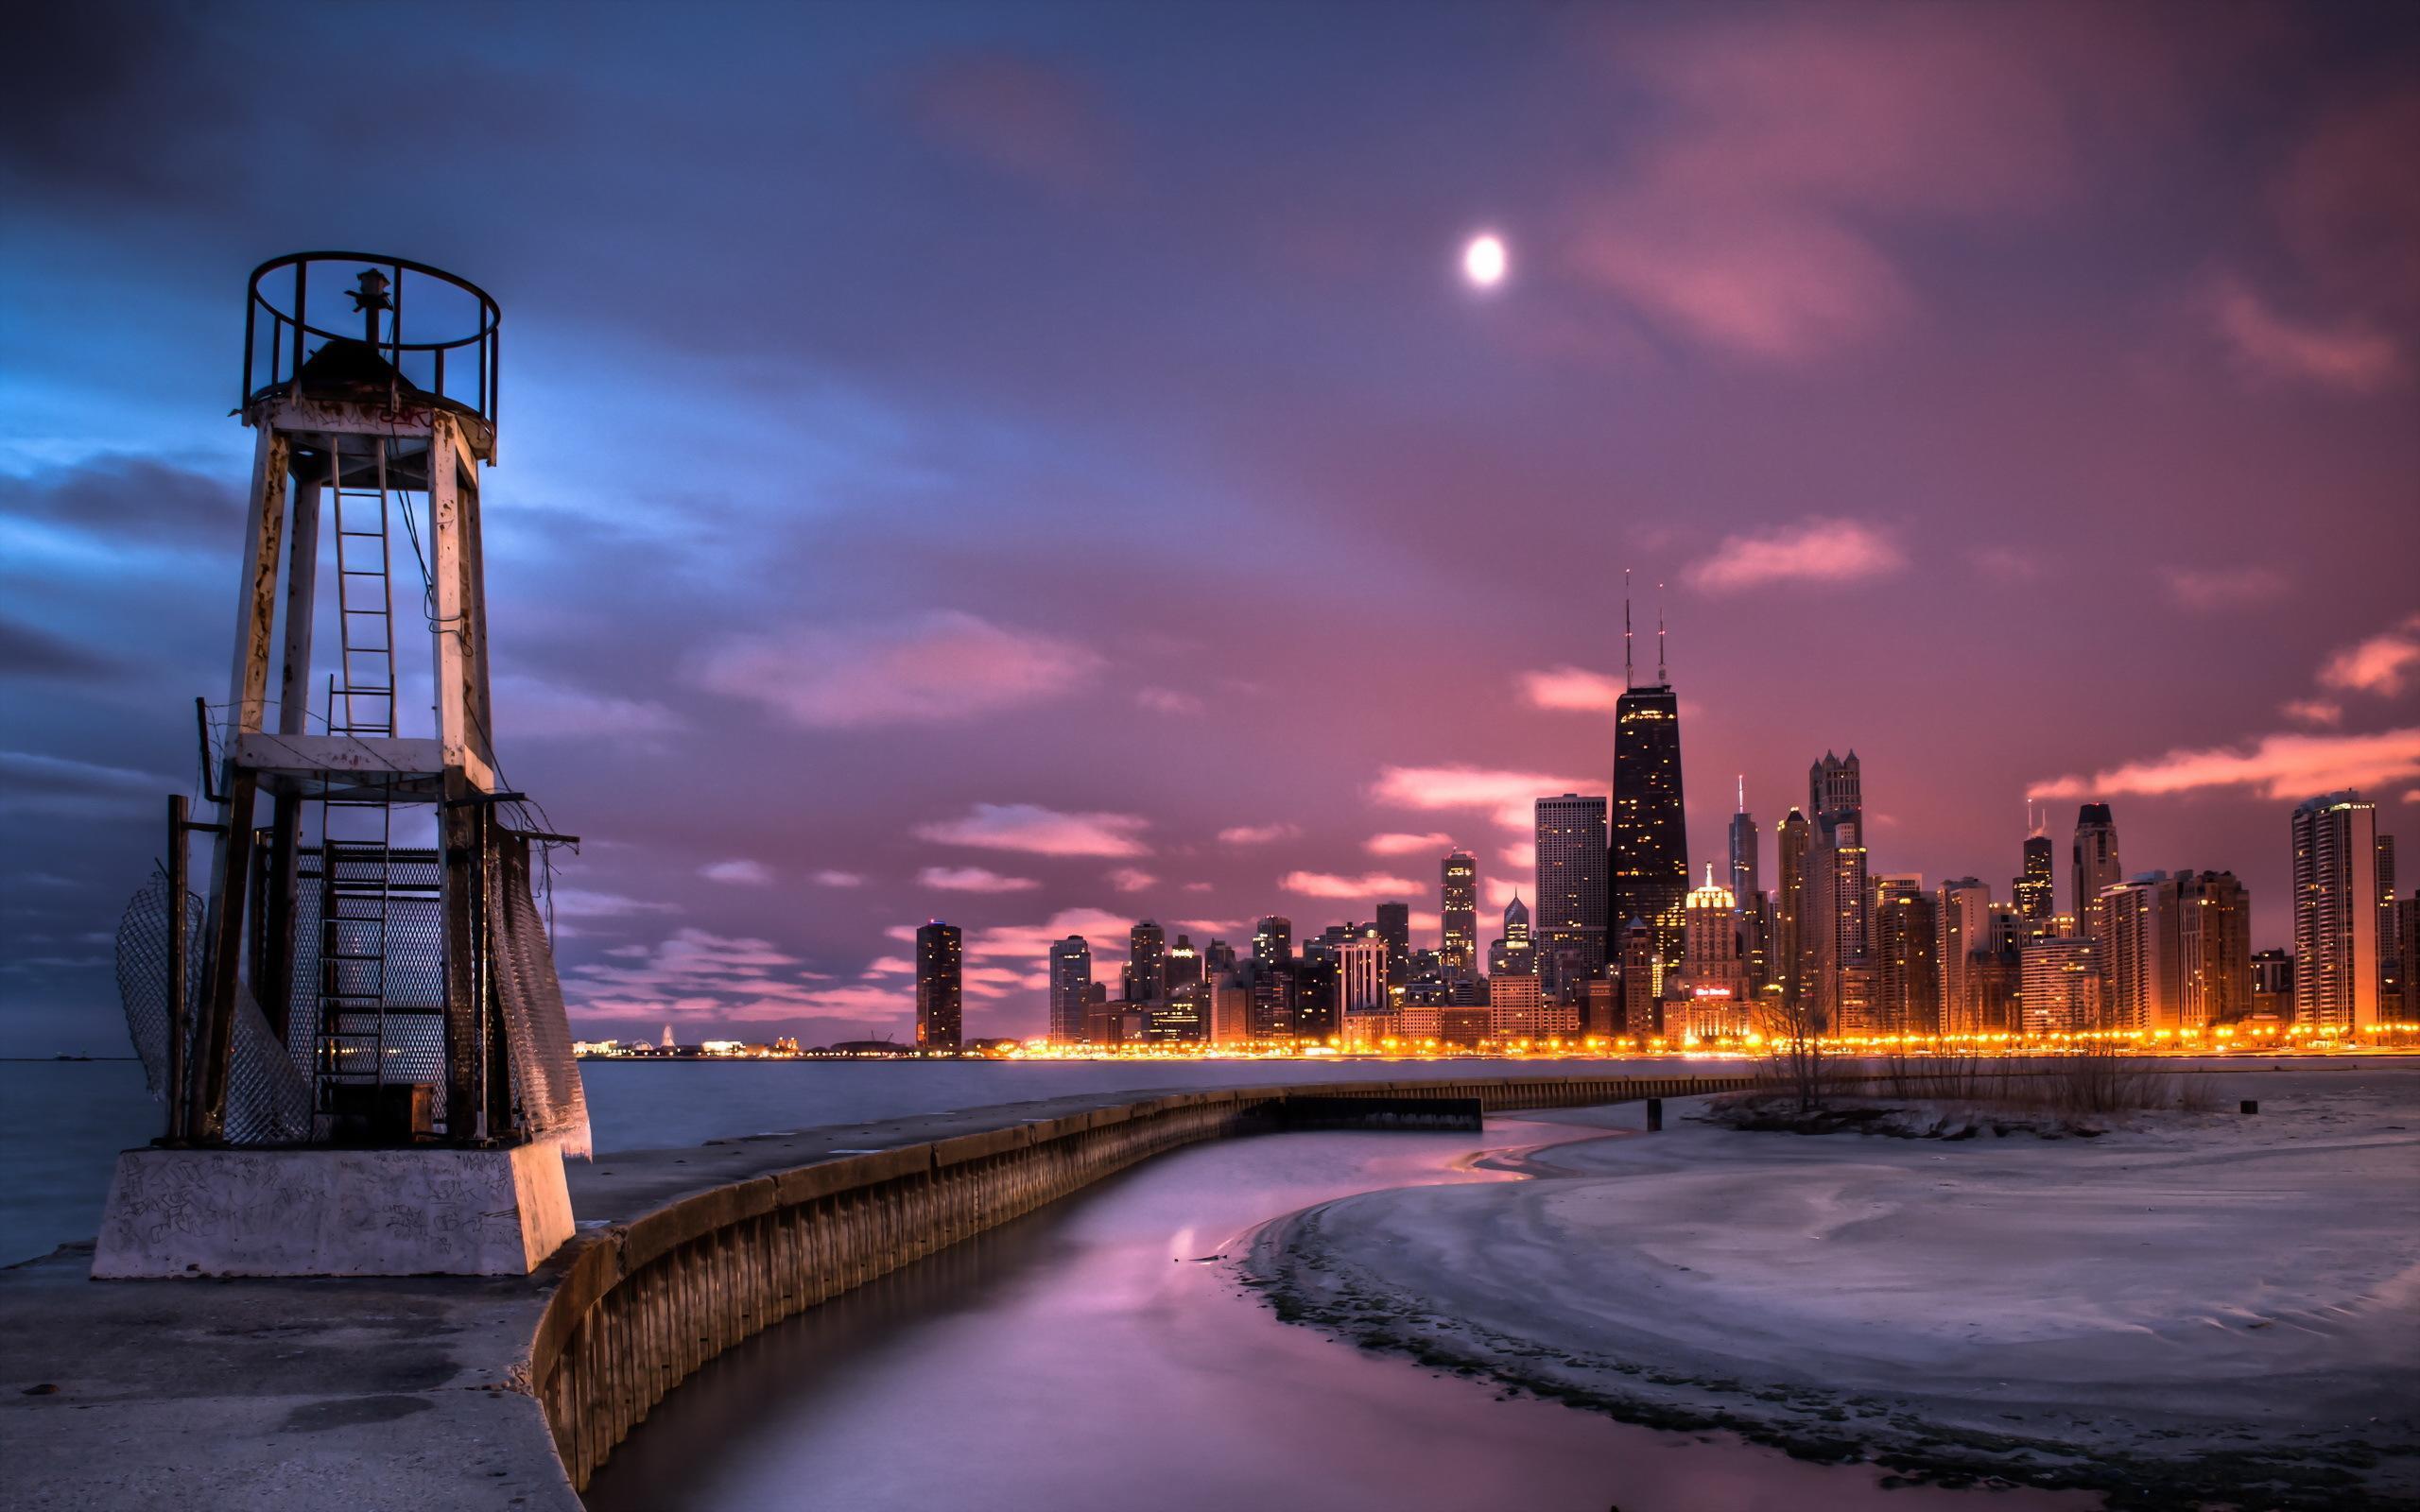 Chicago Skyline Photo Wallpaper for iPhone. wollpopor